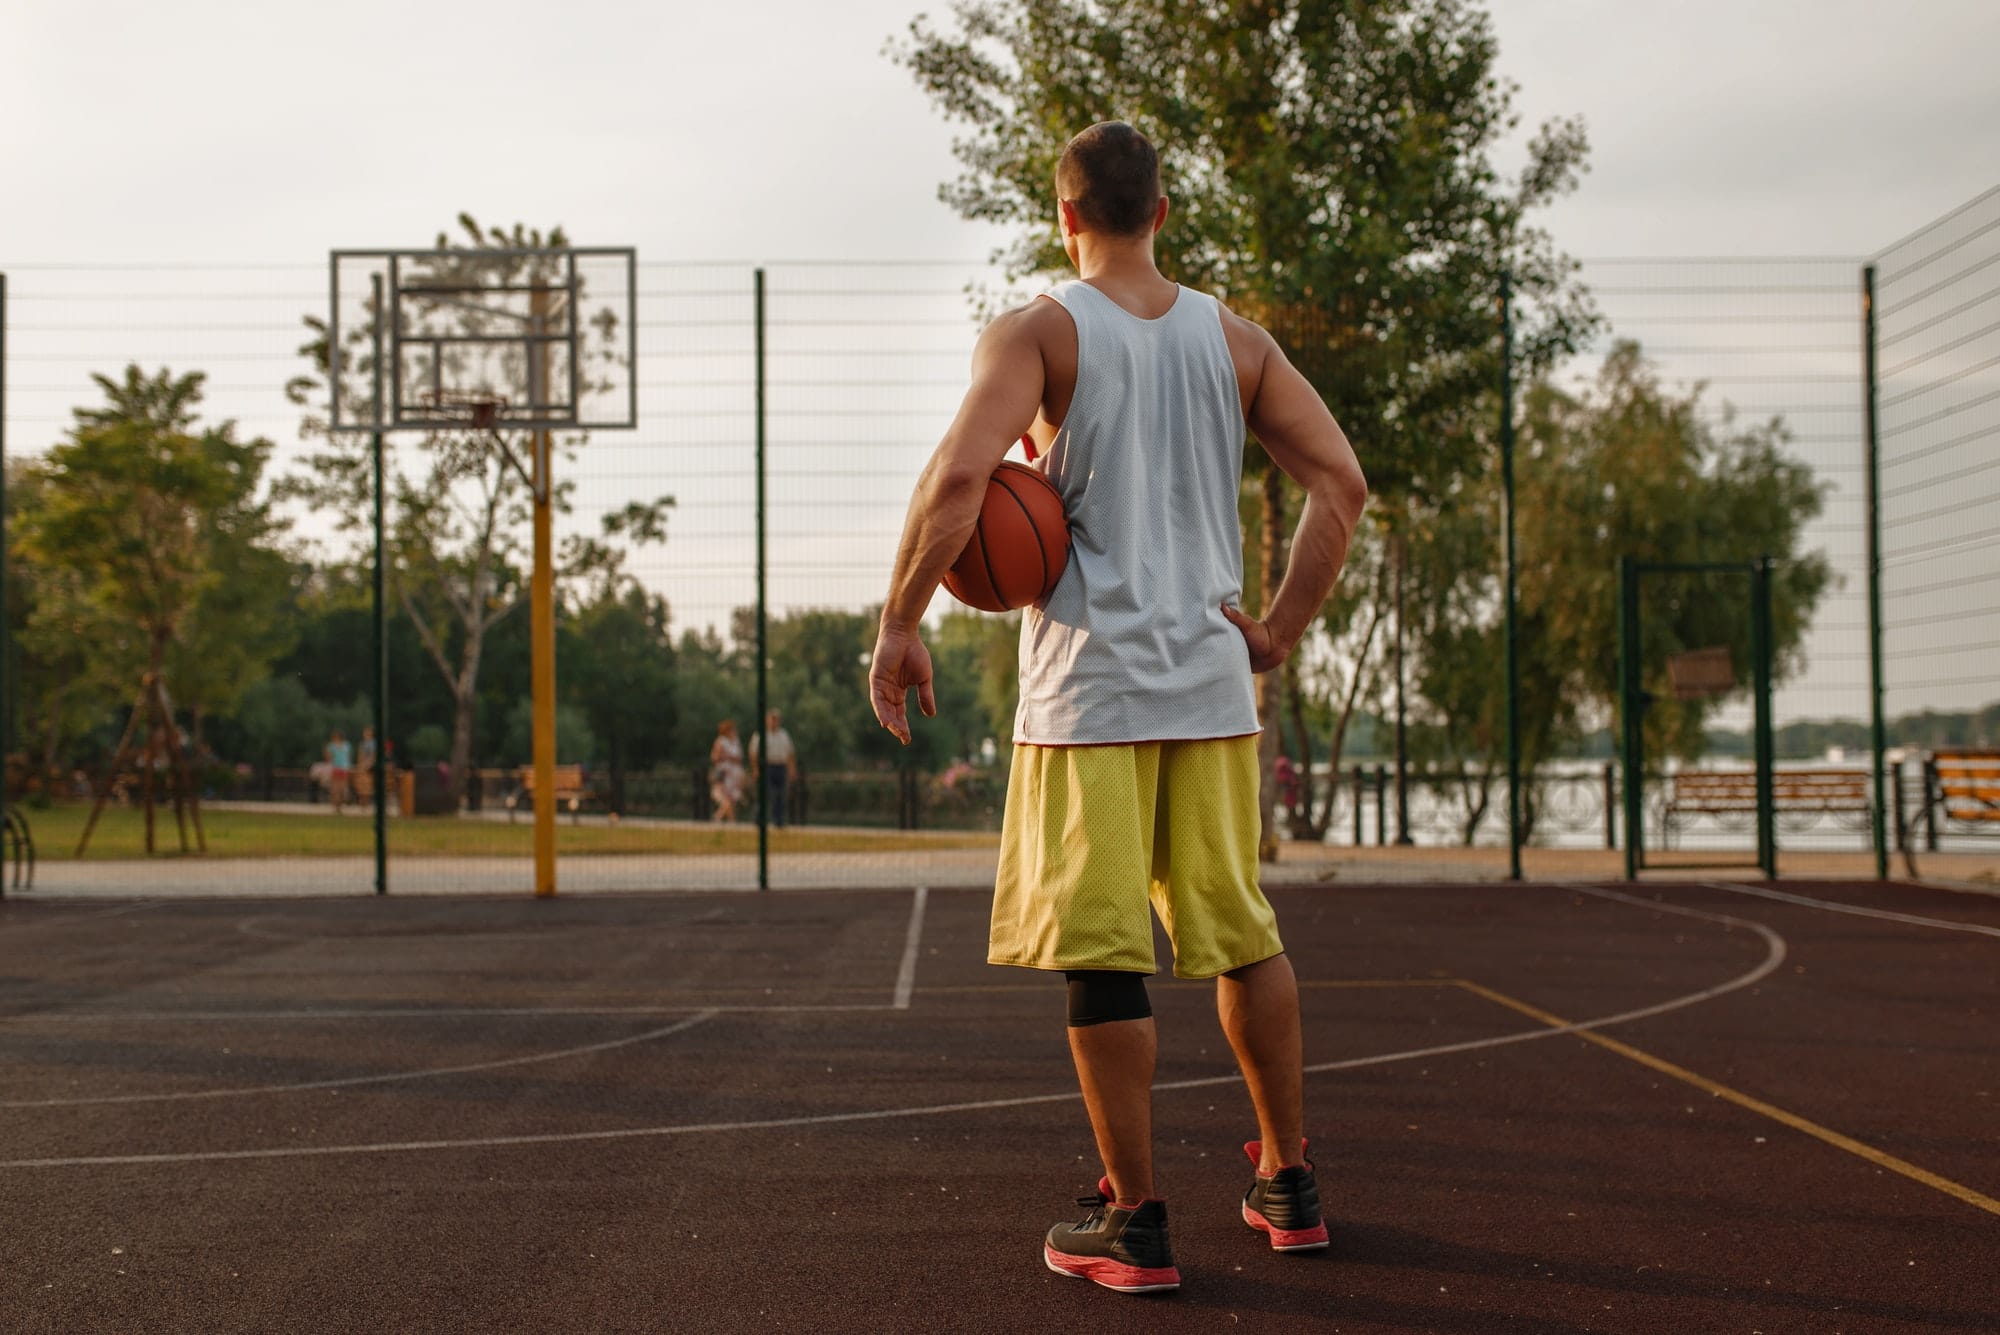 Muscular basketball player on outdoor court